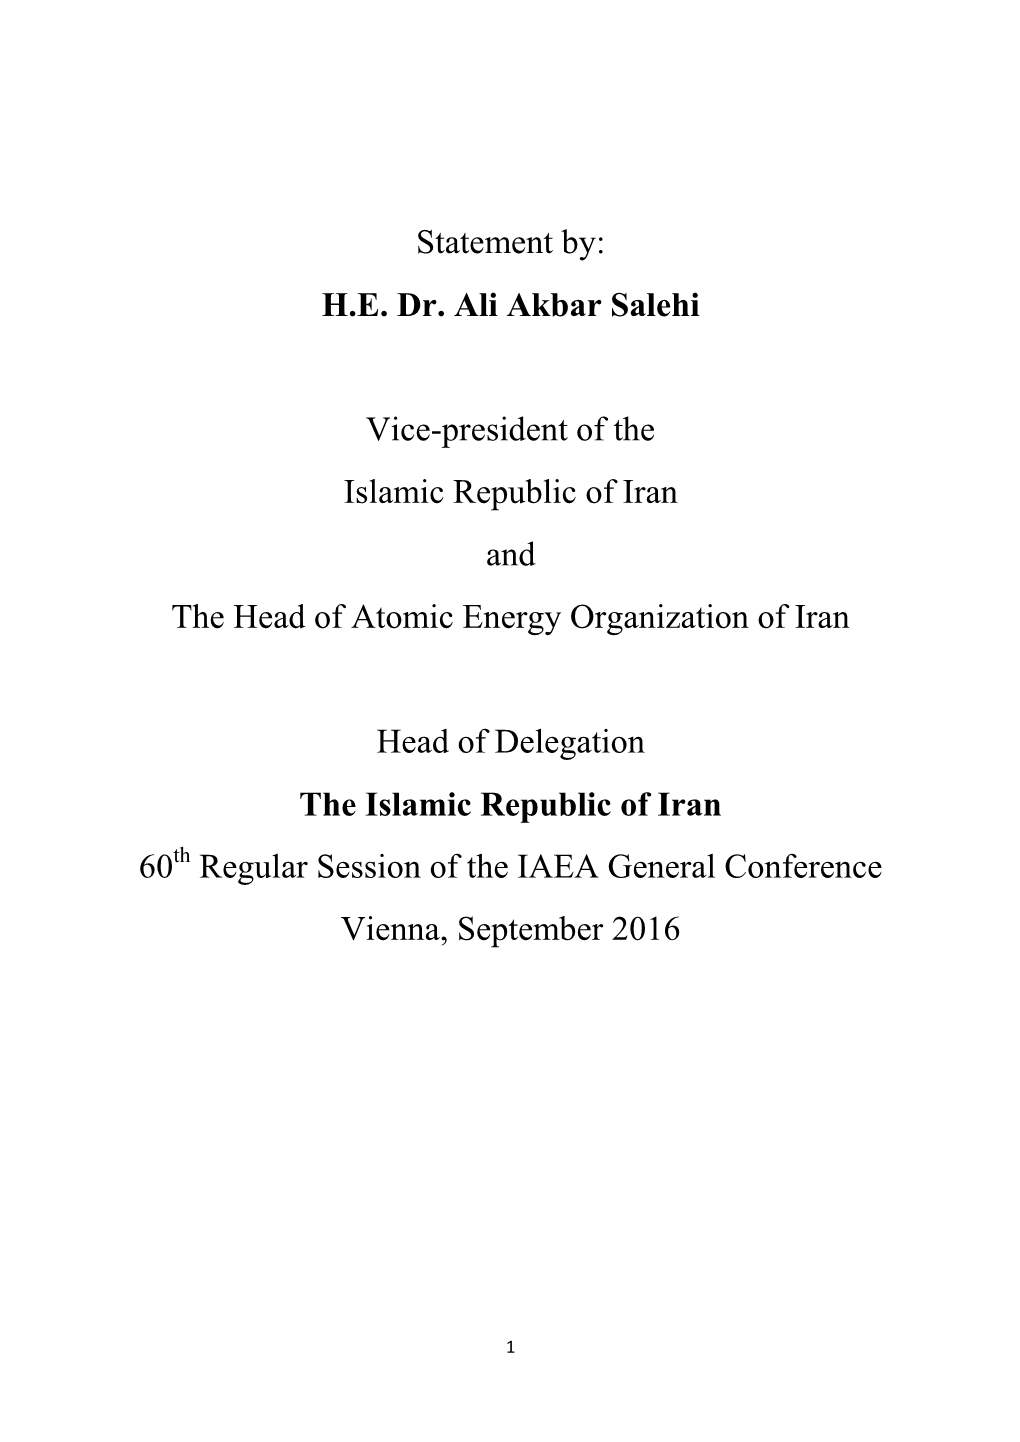 Statement By: H.E. Dr. Ali Akbar Salehi Vice-President of the Islamic